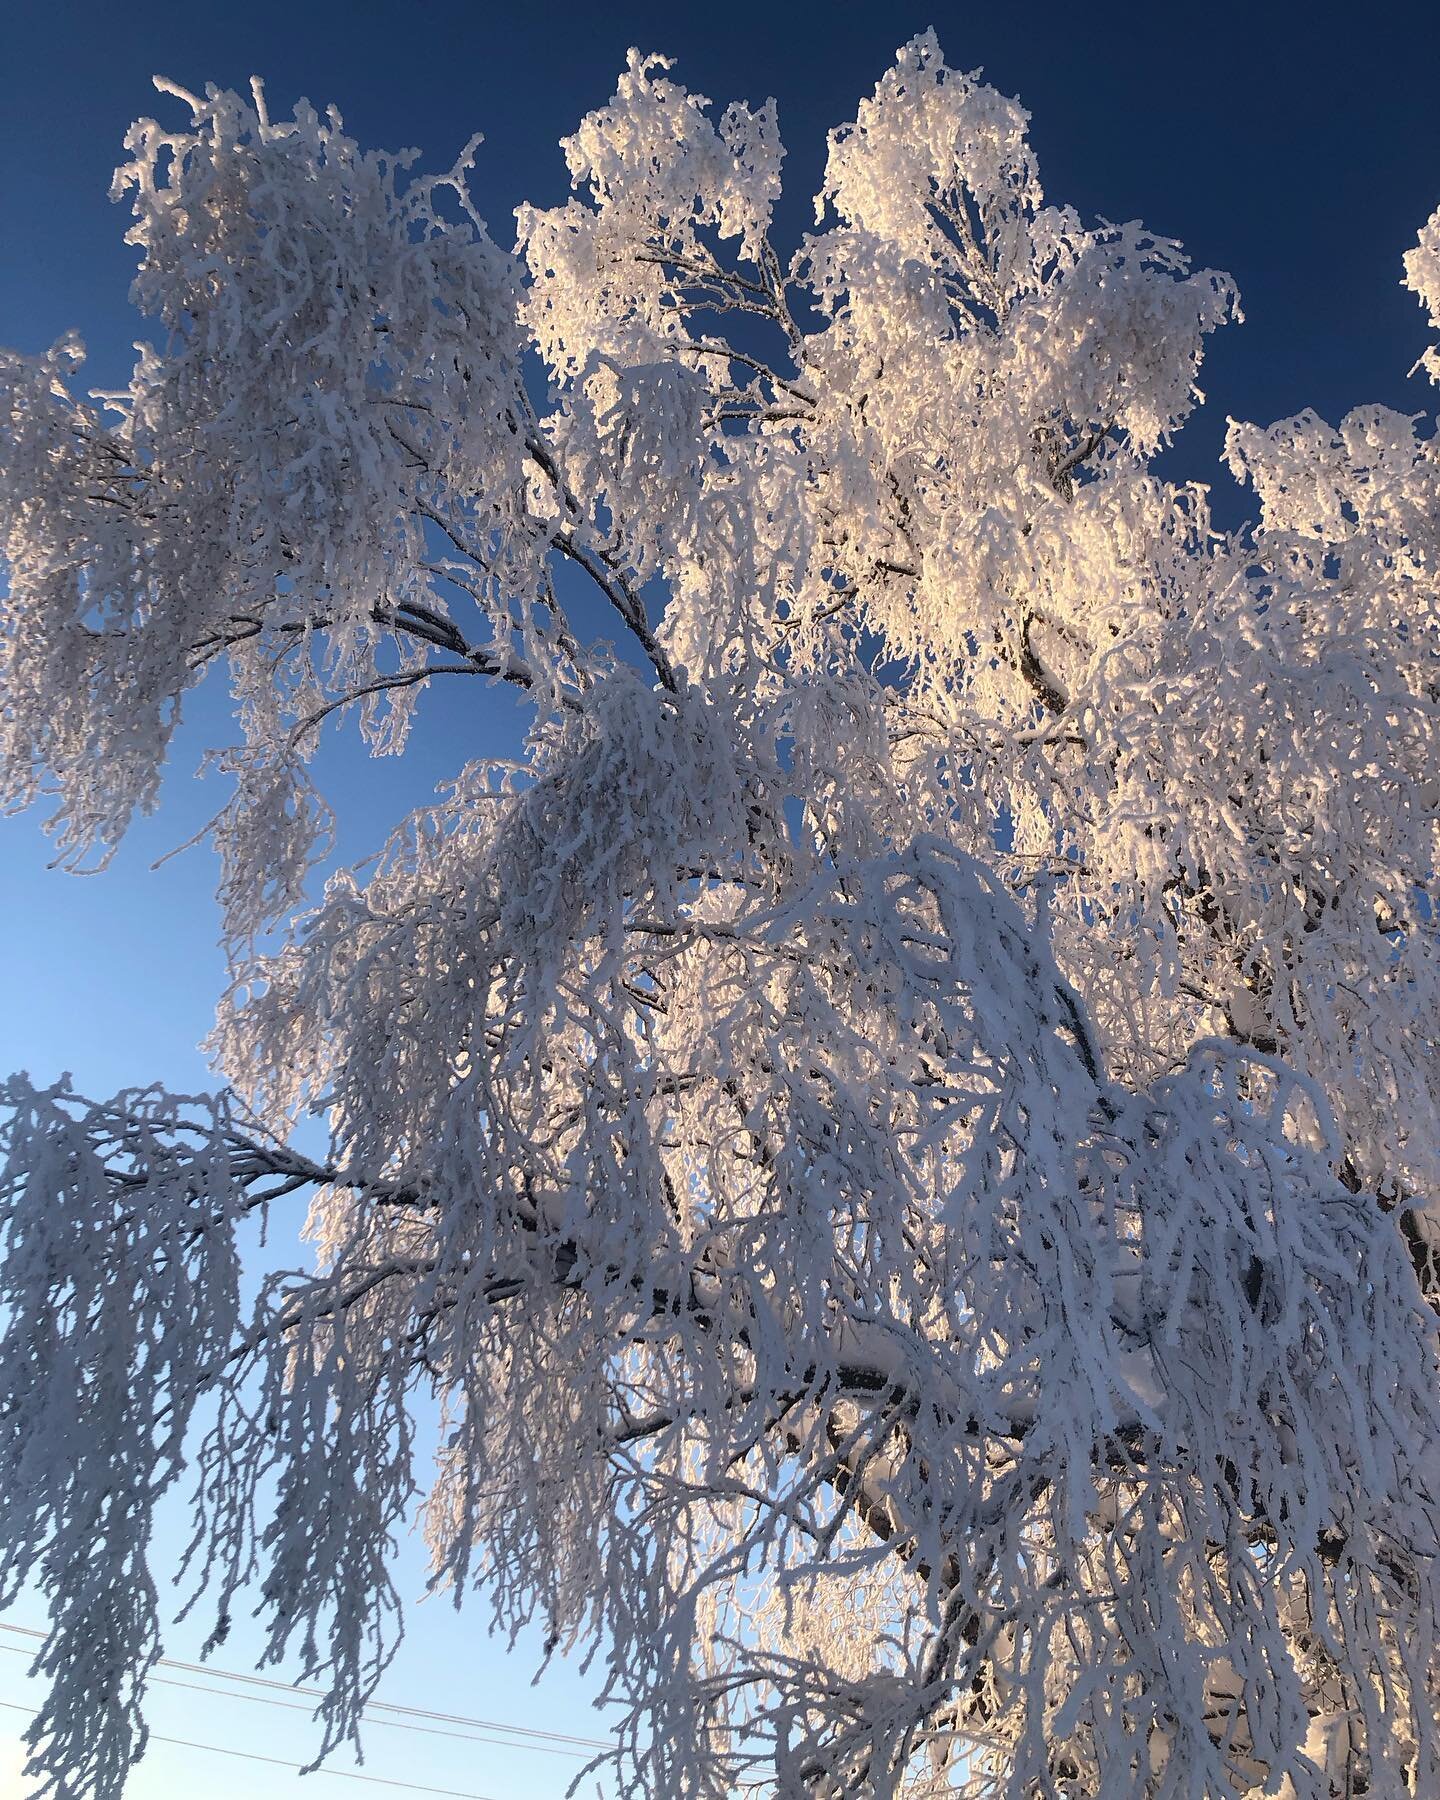 Happy winter solstice! #wintersolstice #alaskalife #wintertrees #hightidearts #holidayseason